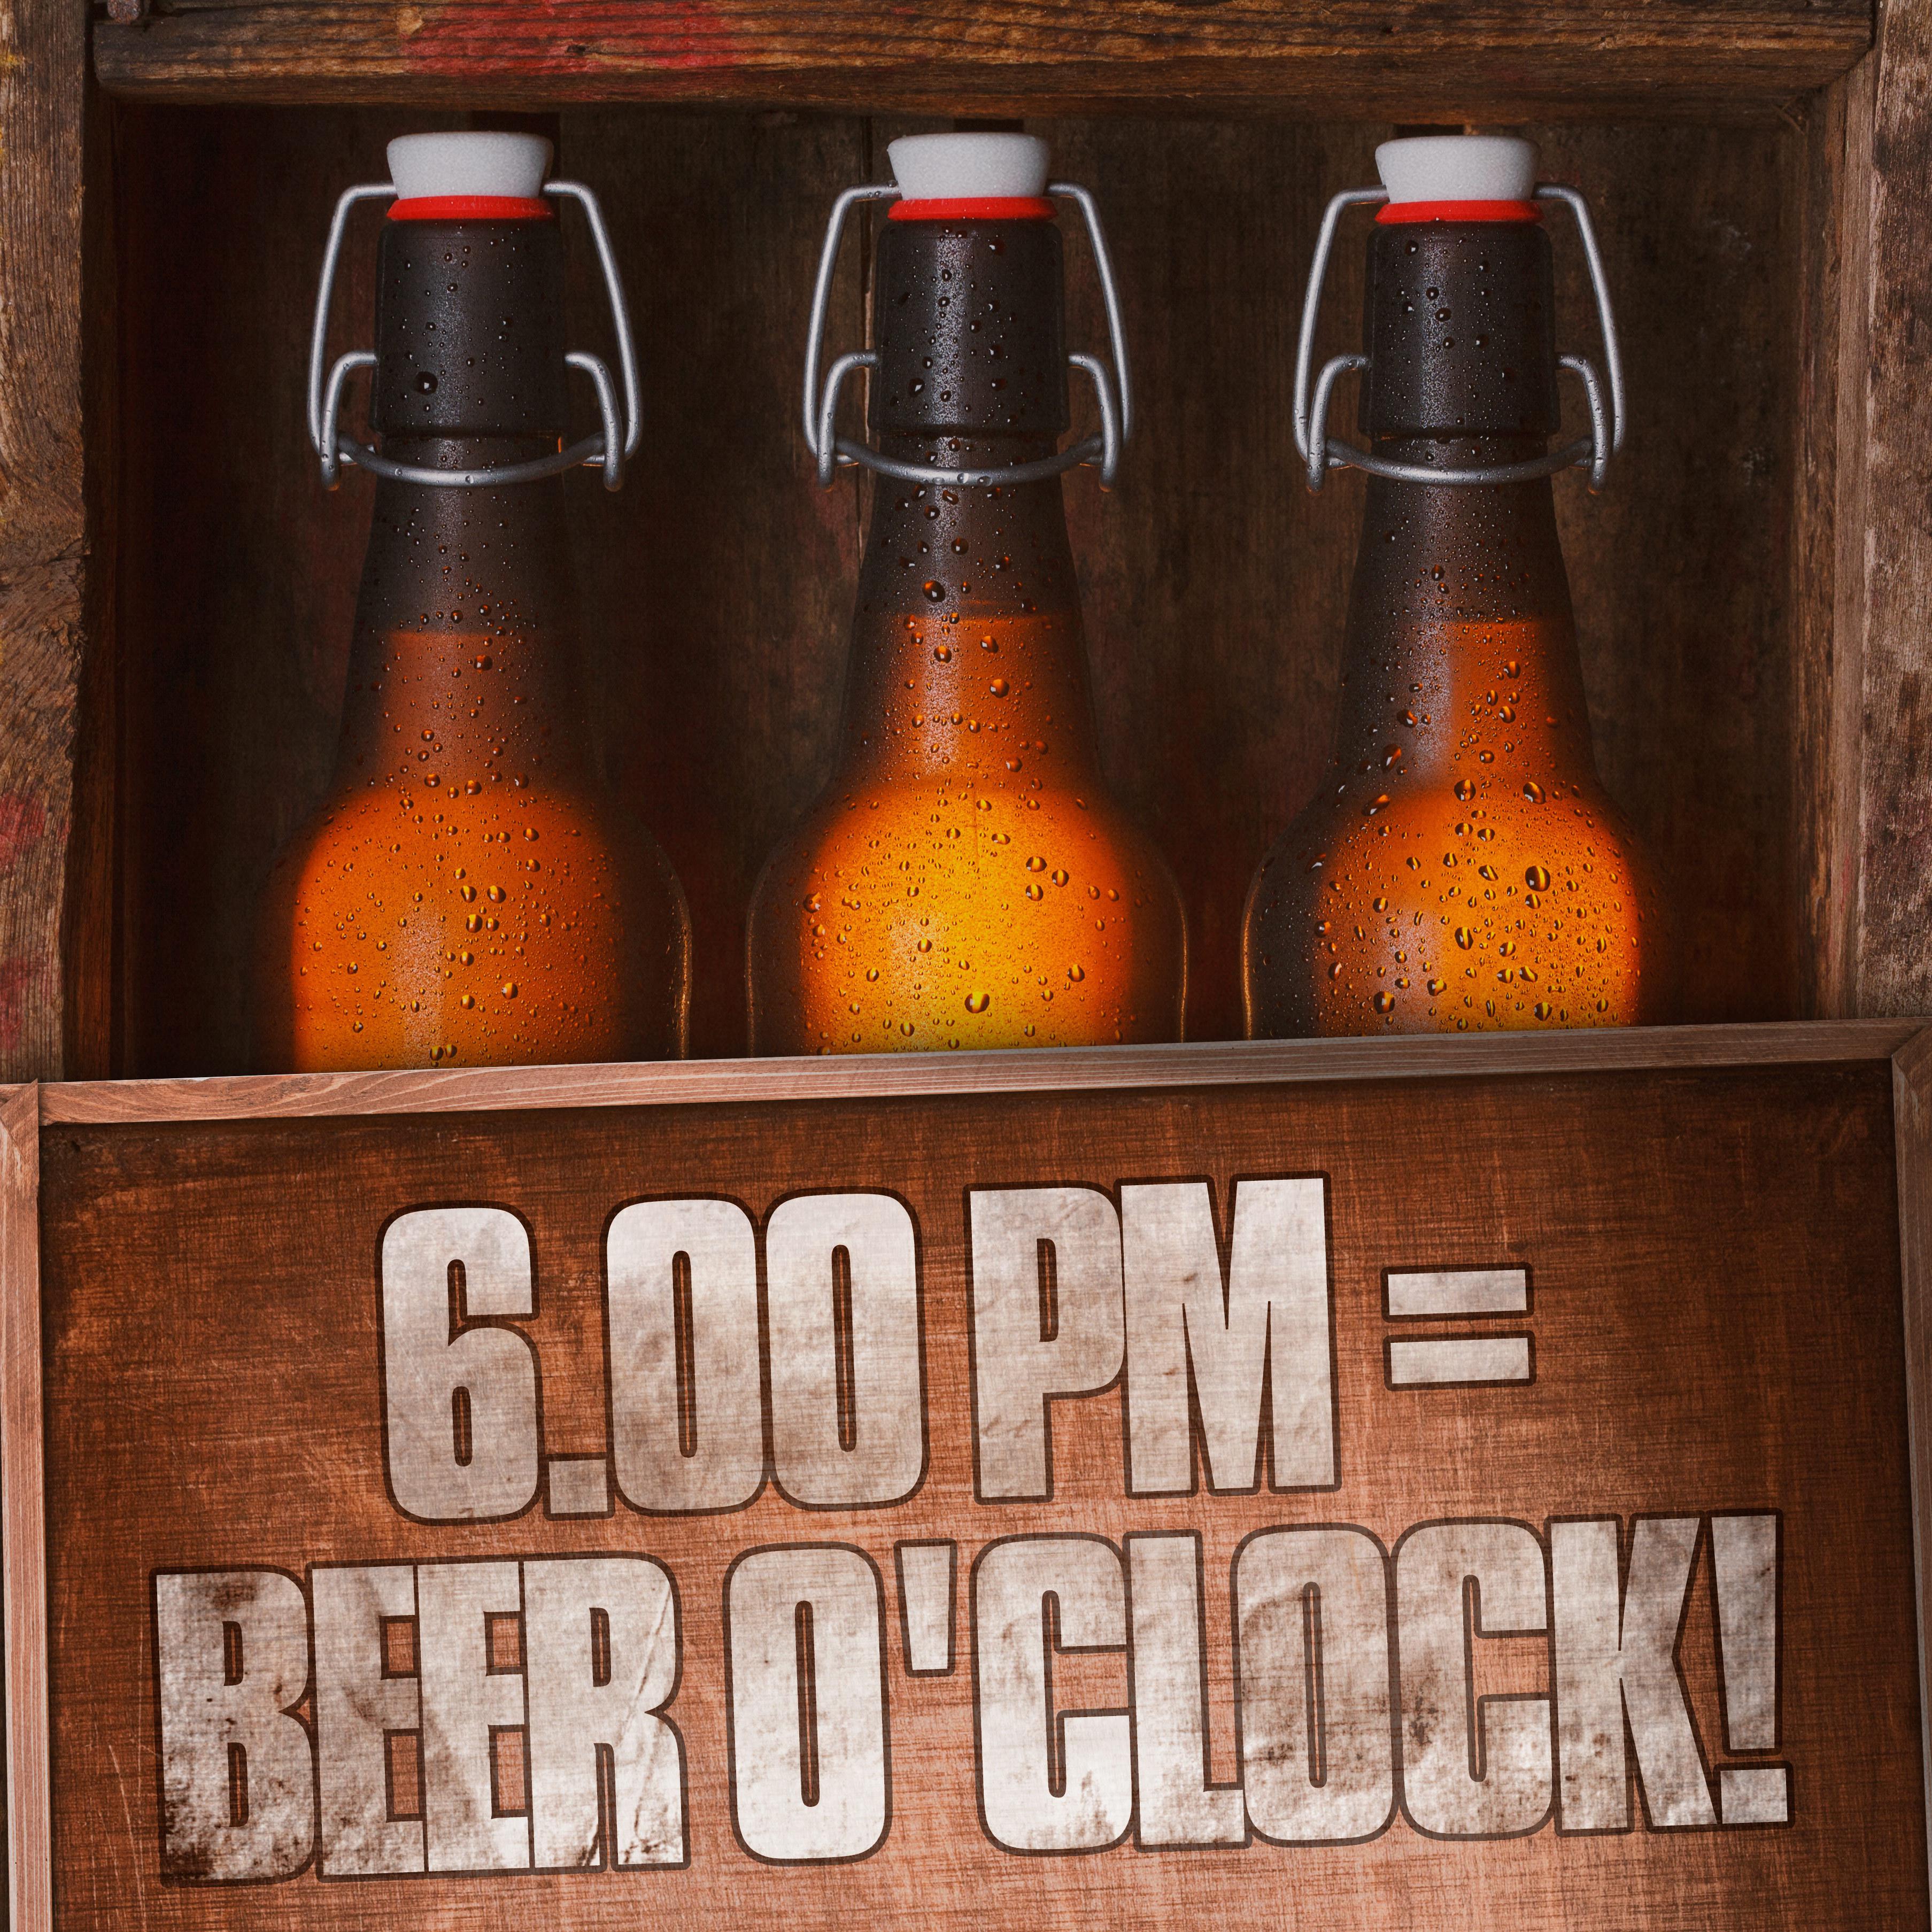 6.00pm = Beer O'Clock!